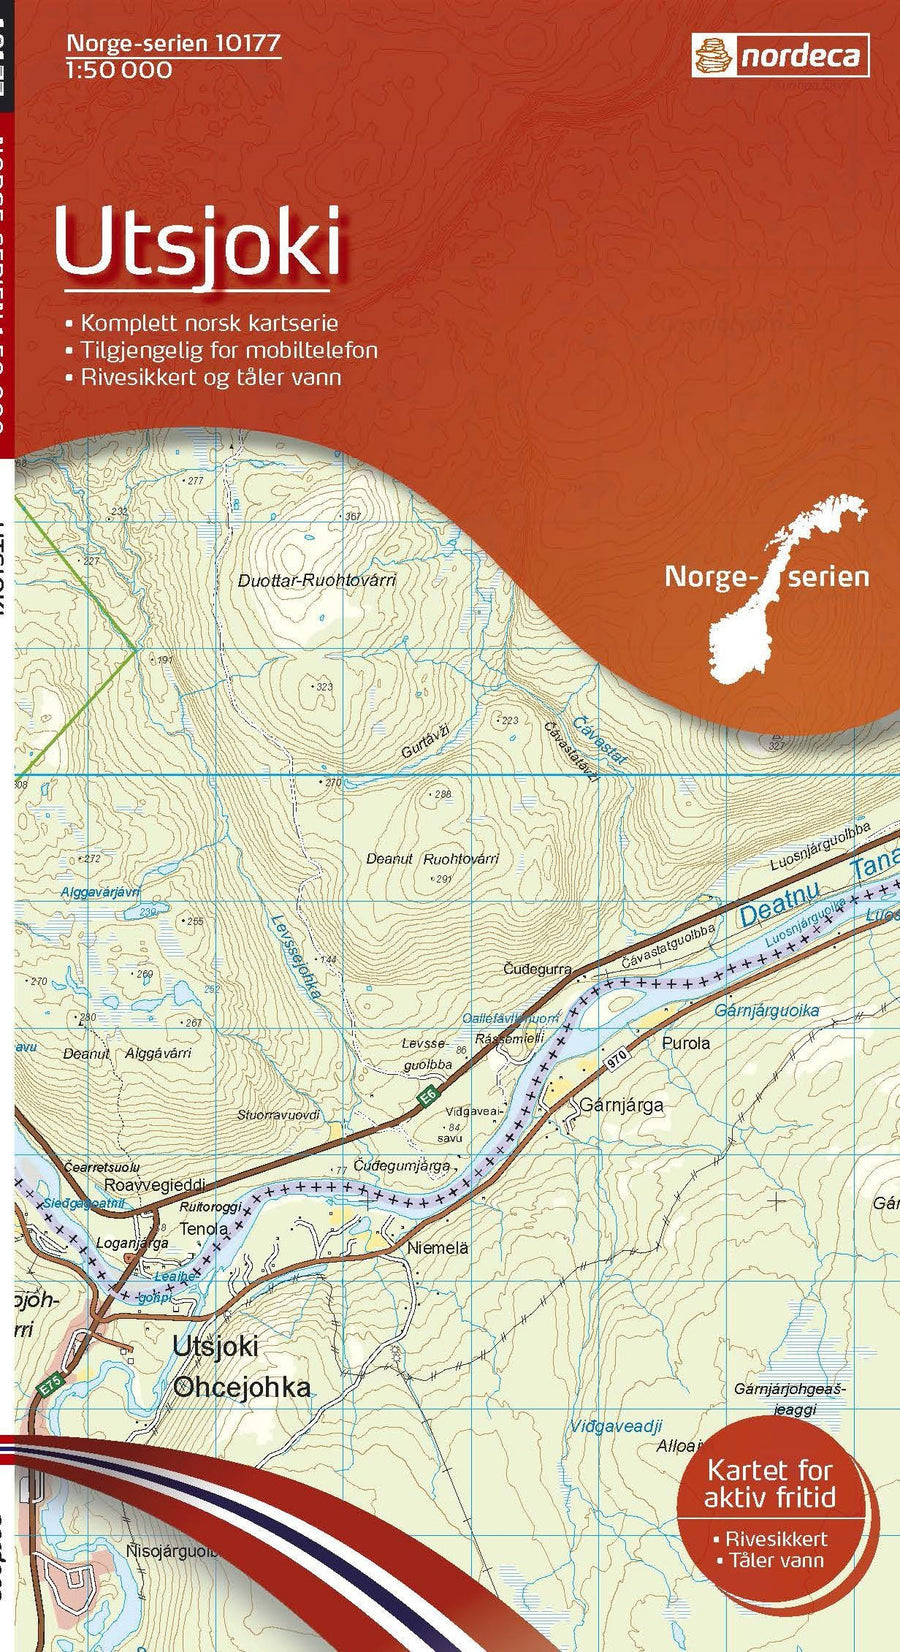 Carte de randonnée n° 10177 - Utsjoki (Norvège) | Nordeca - Norge-serien carte pliée Nordeca 